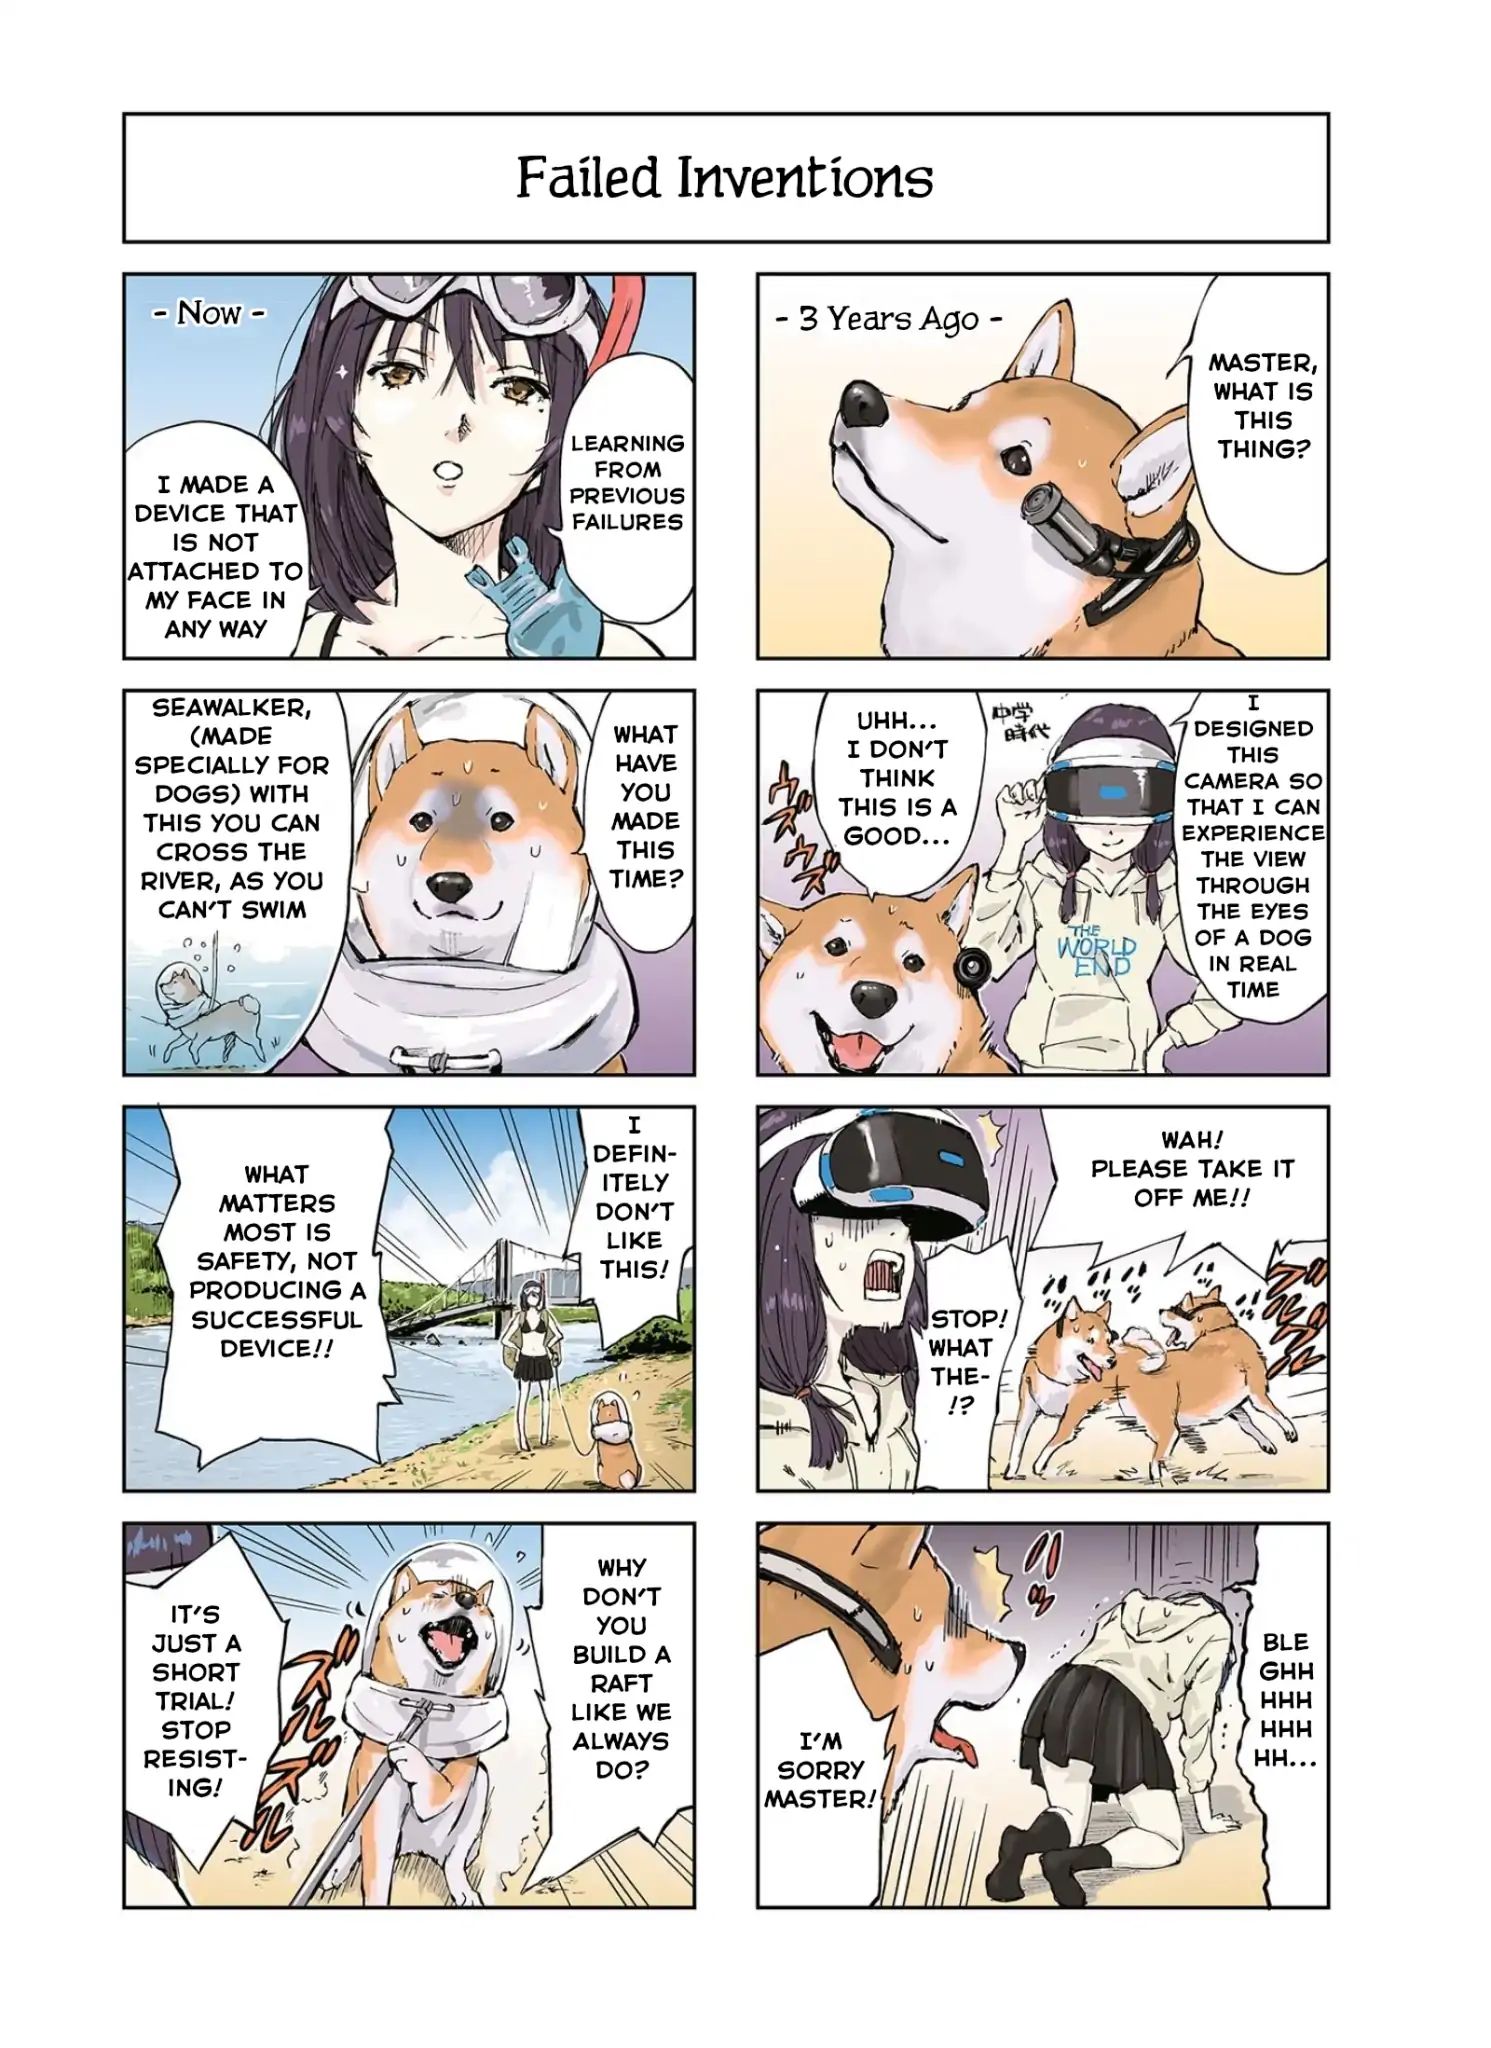 Roaming The Apocalypse With My Shiba Inu - Page 2